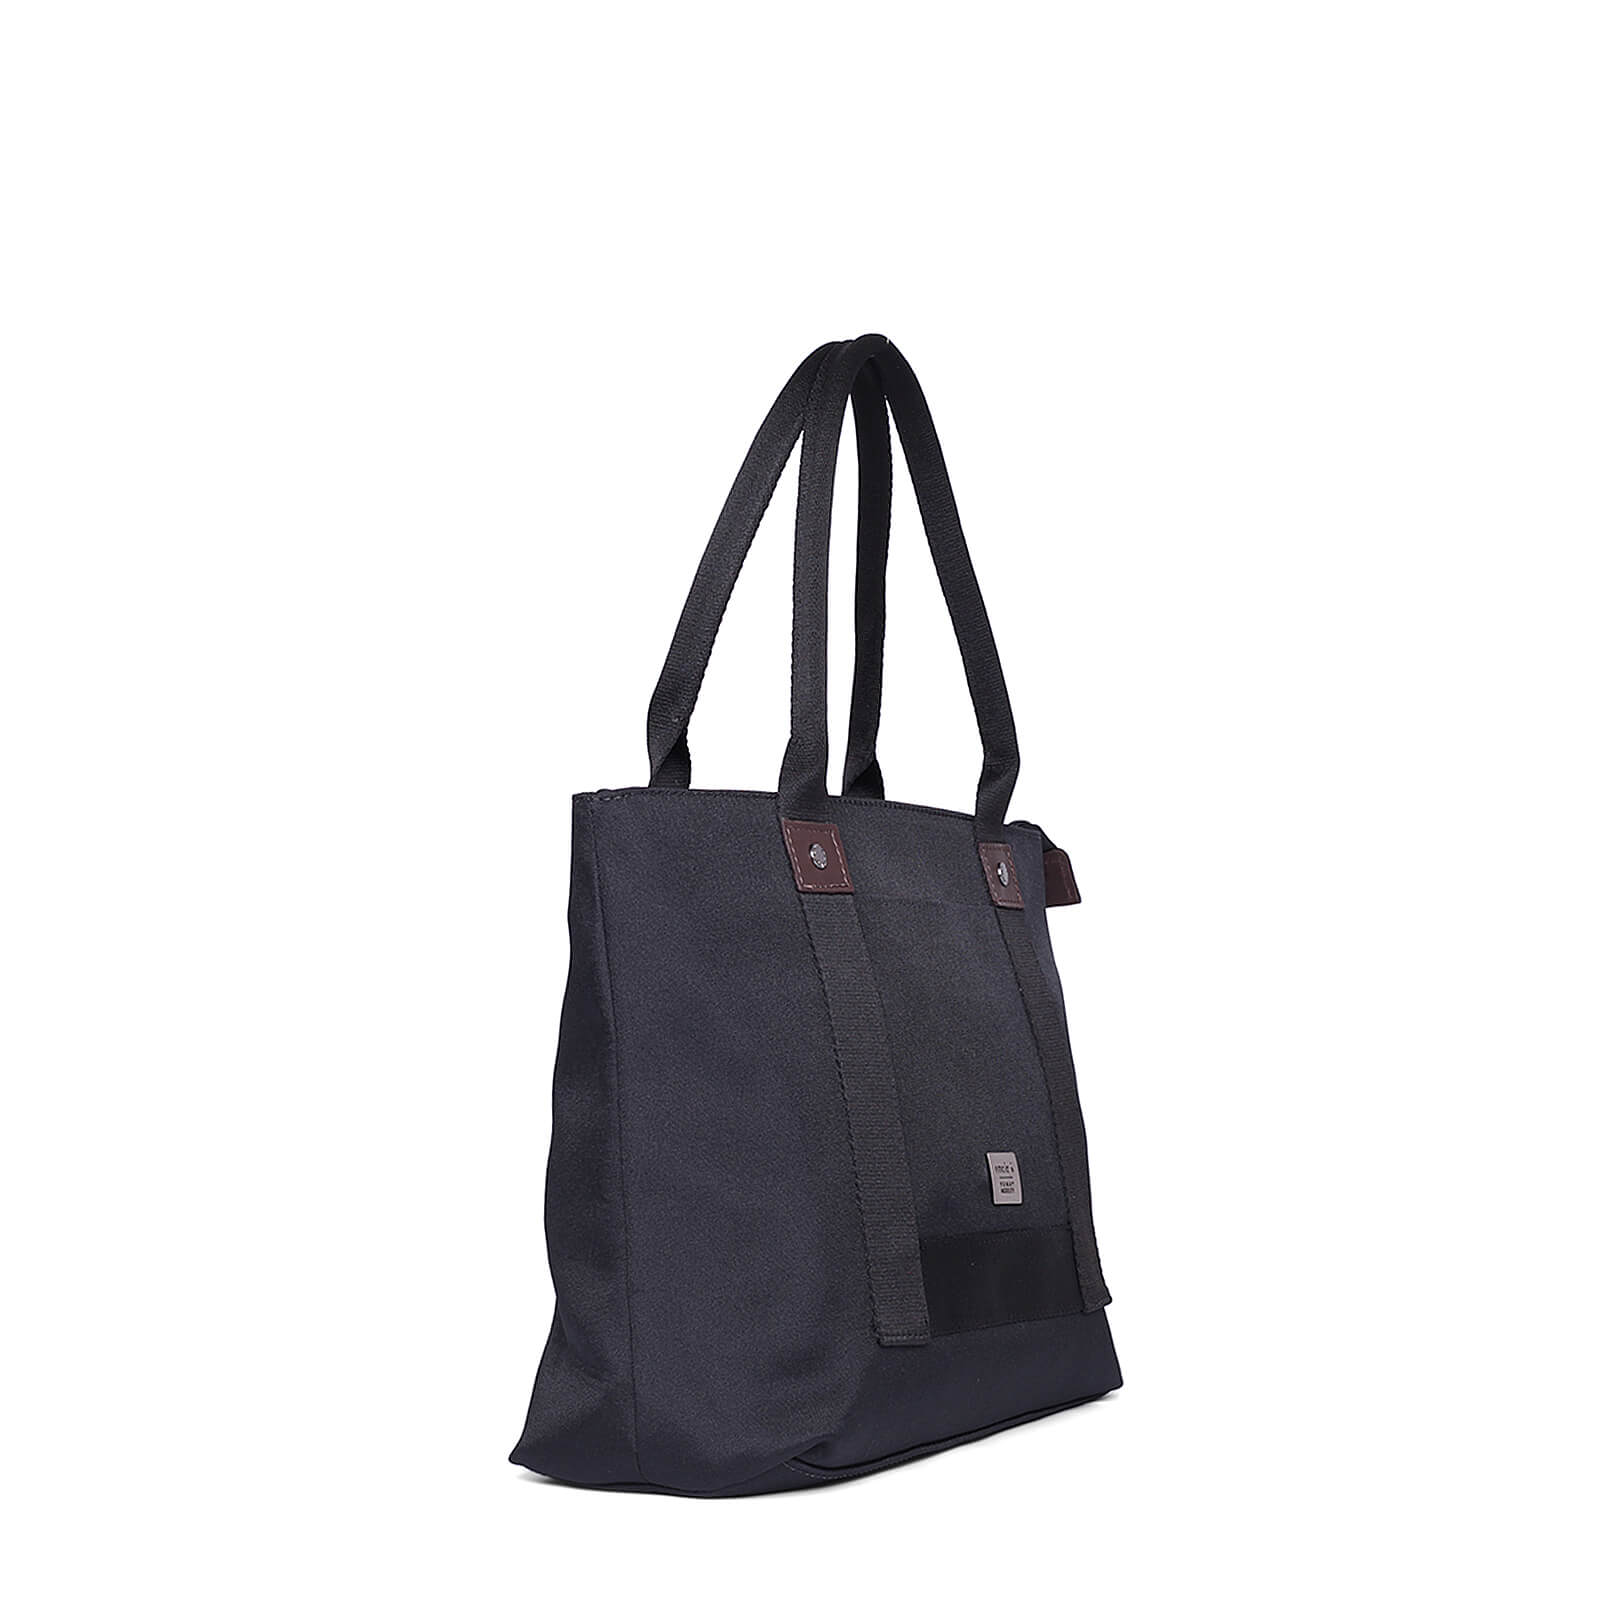 bolsa-shopping-bag-nylon-61092-v24-unclek-preto-2